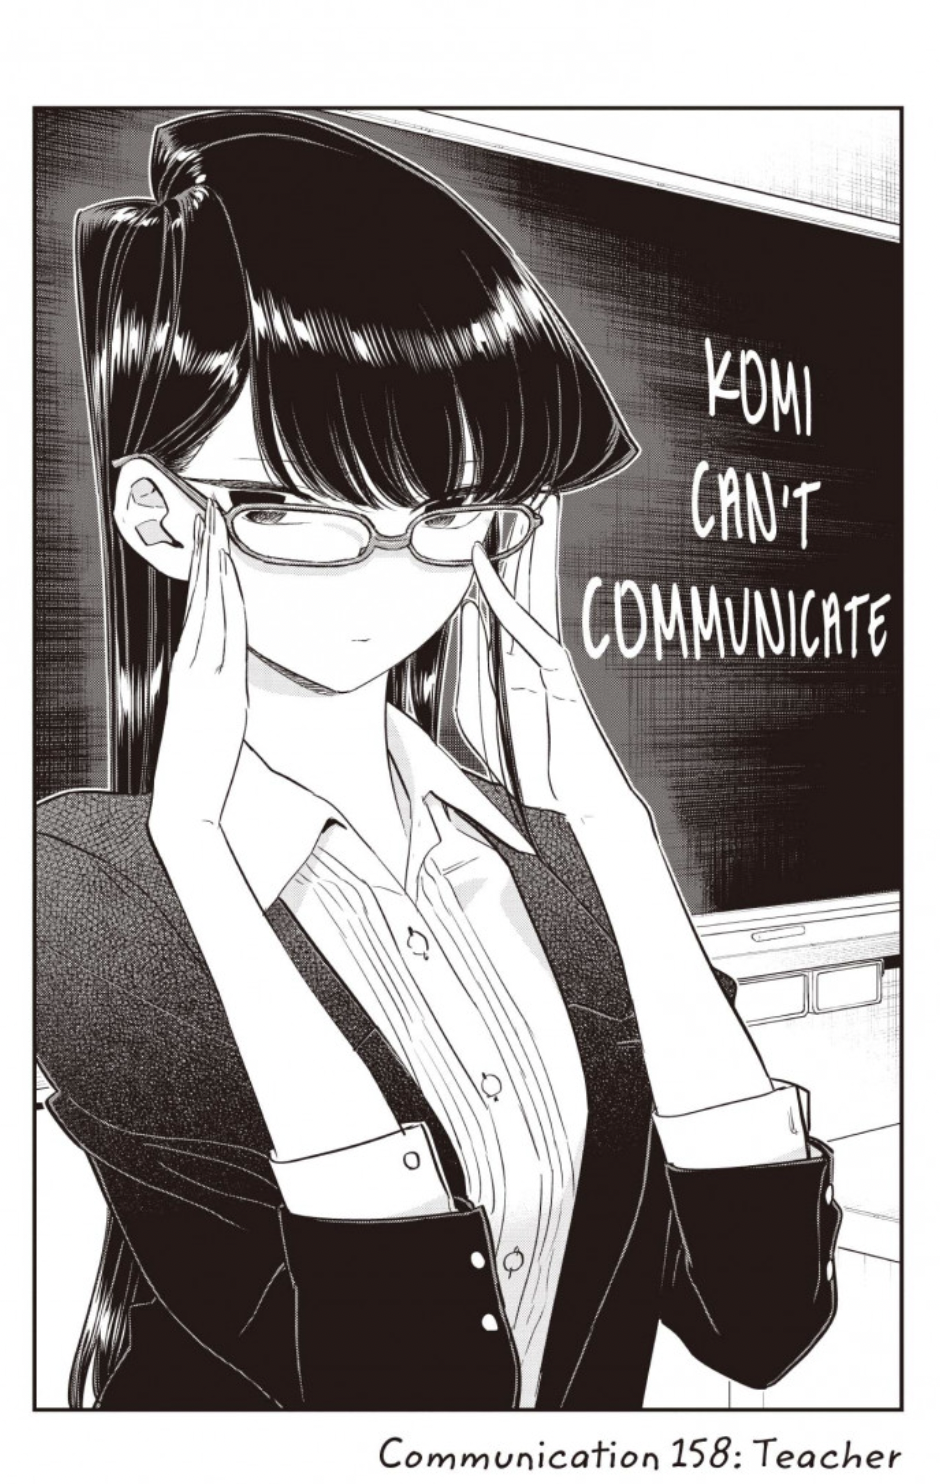 Komi san decides [Komi Can't Communicate] 